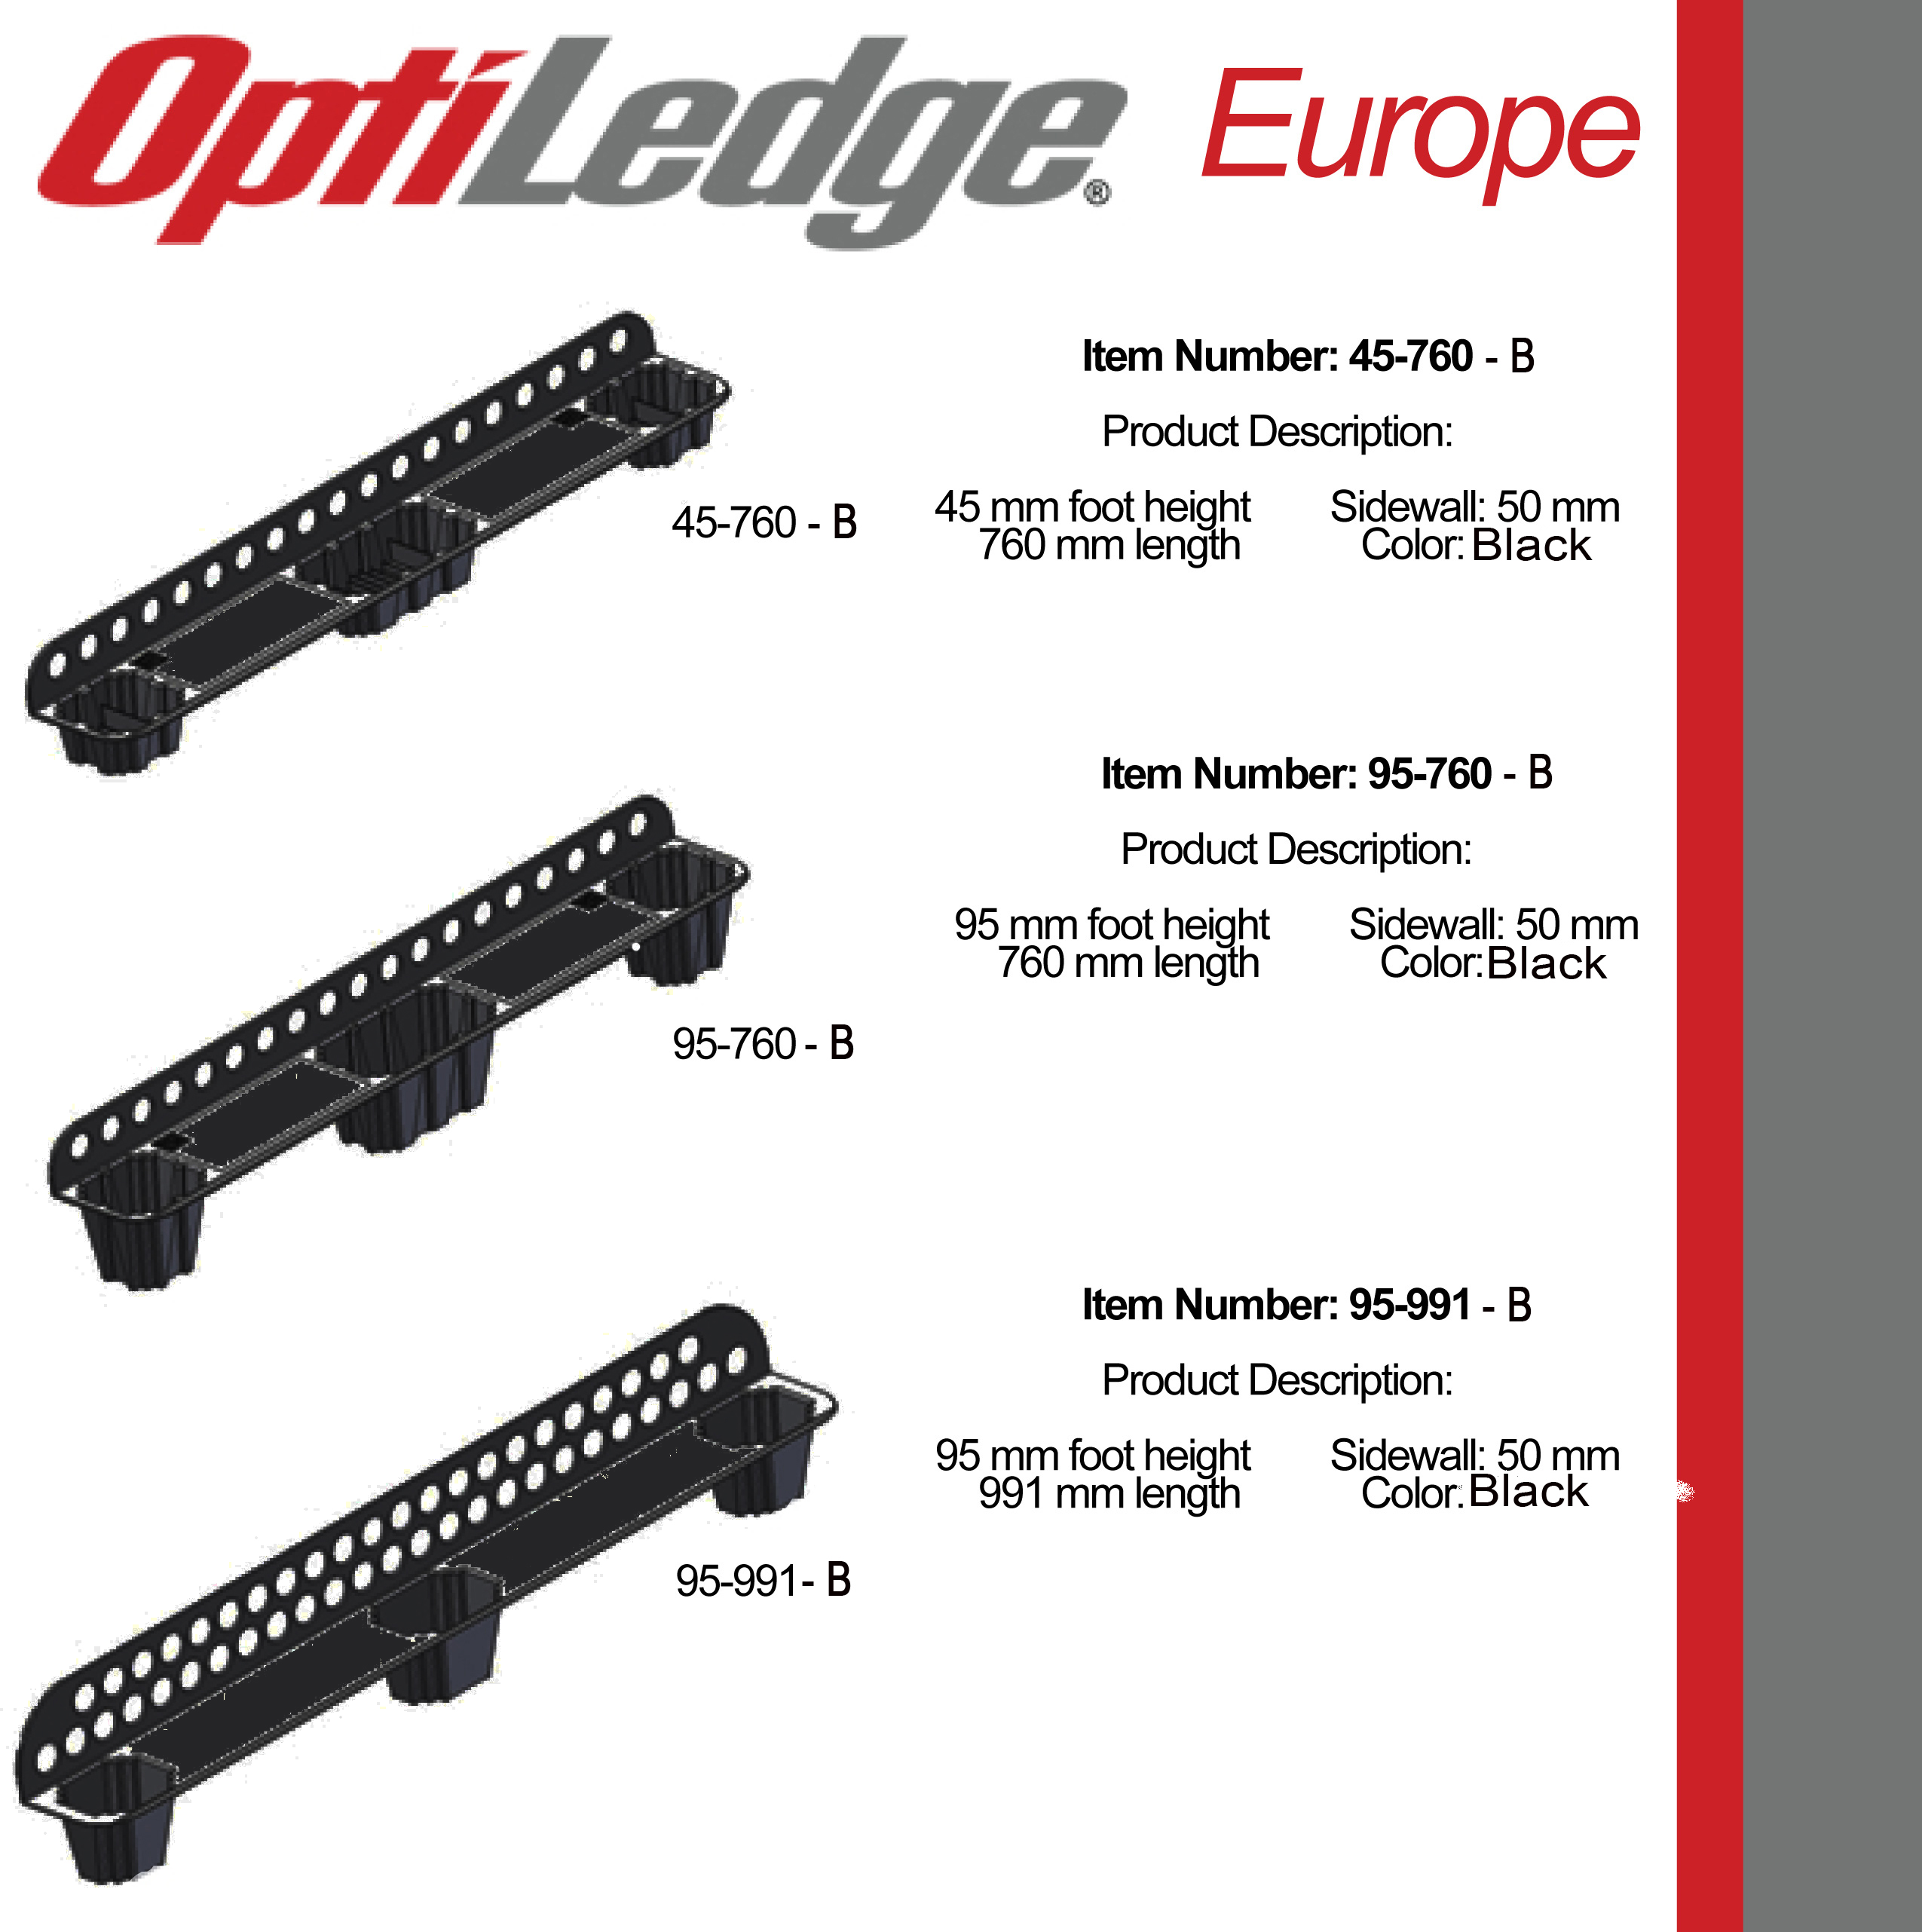 optiledge-europe_copy_1.jpg